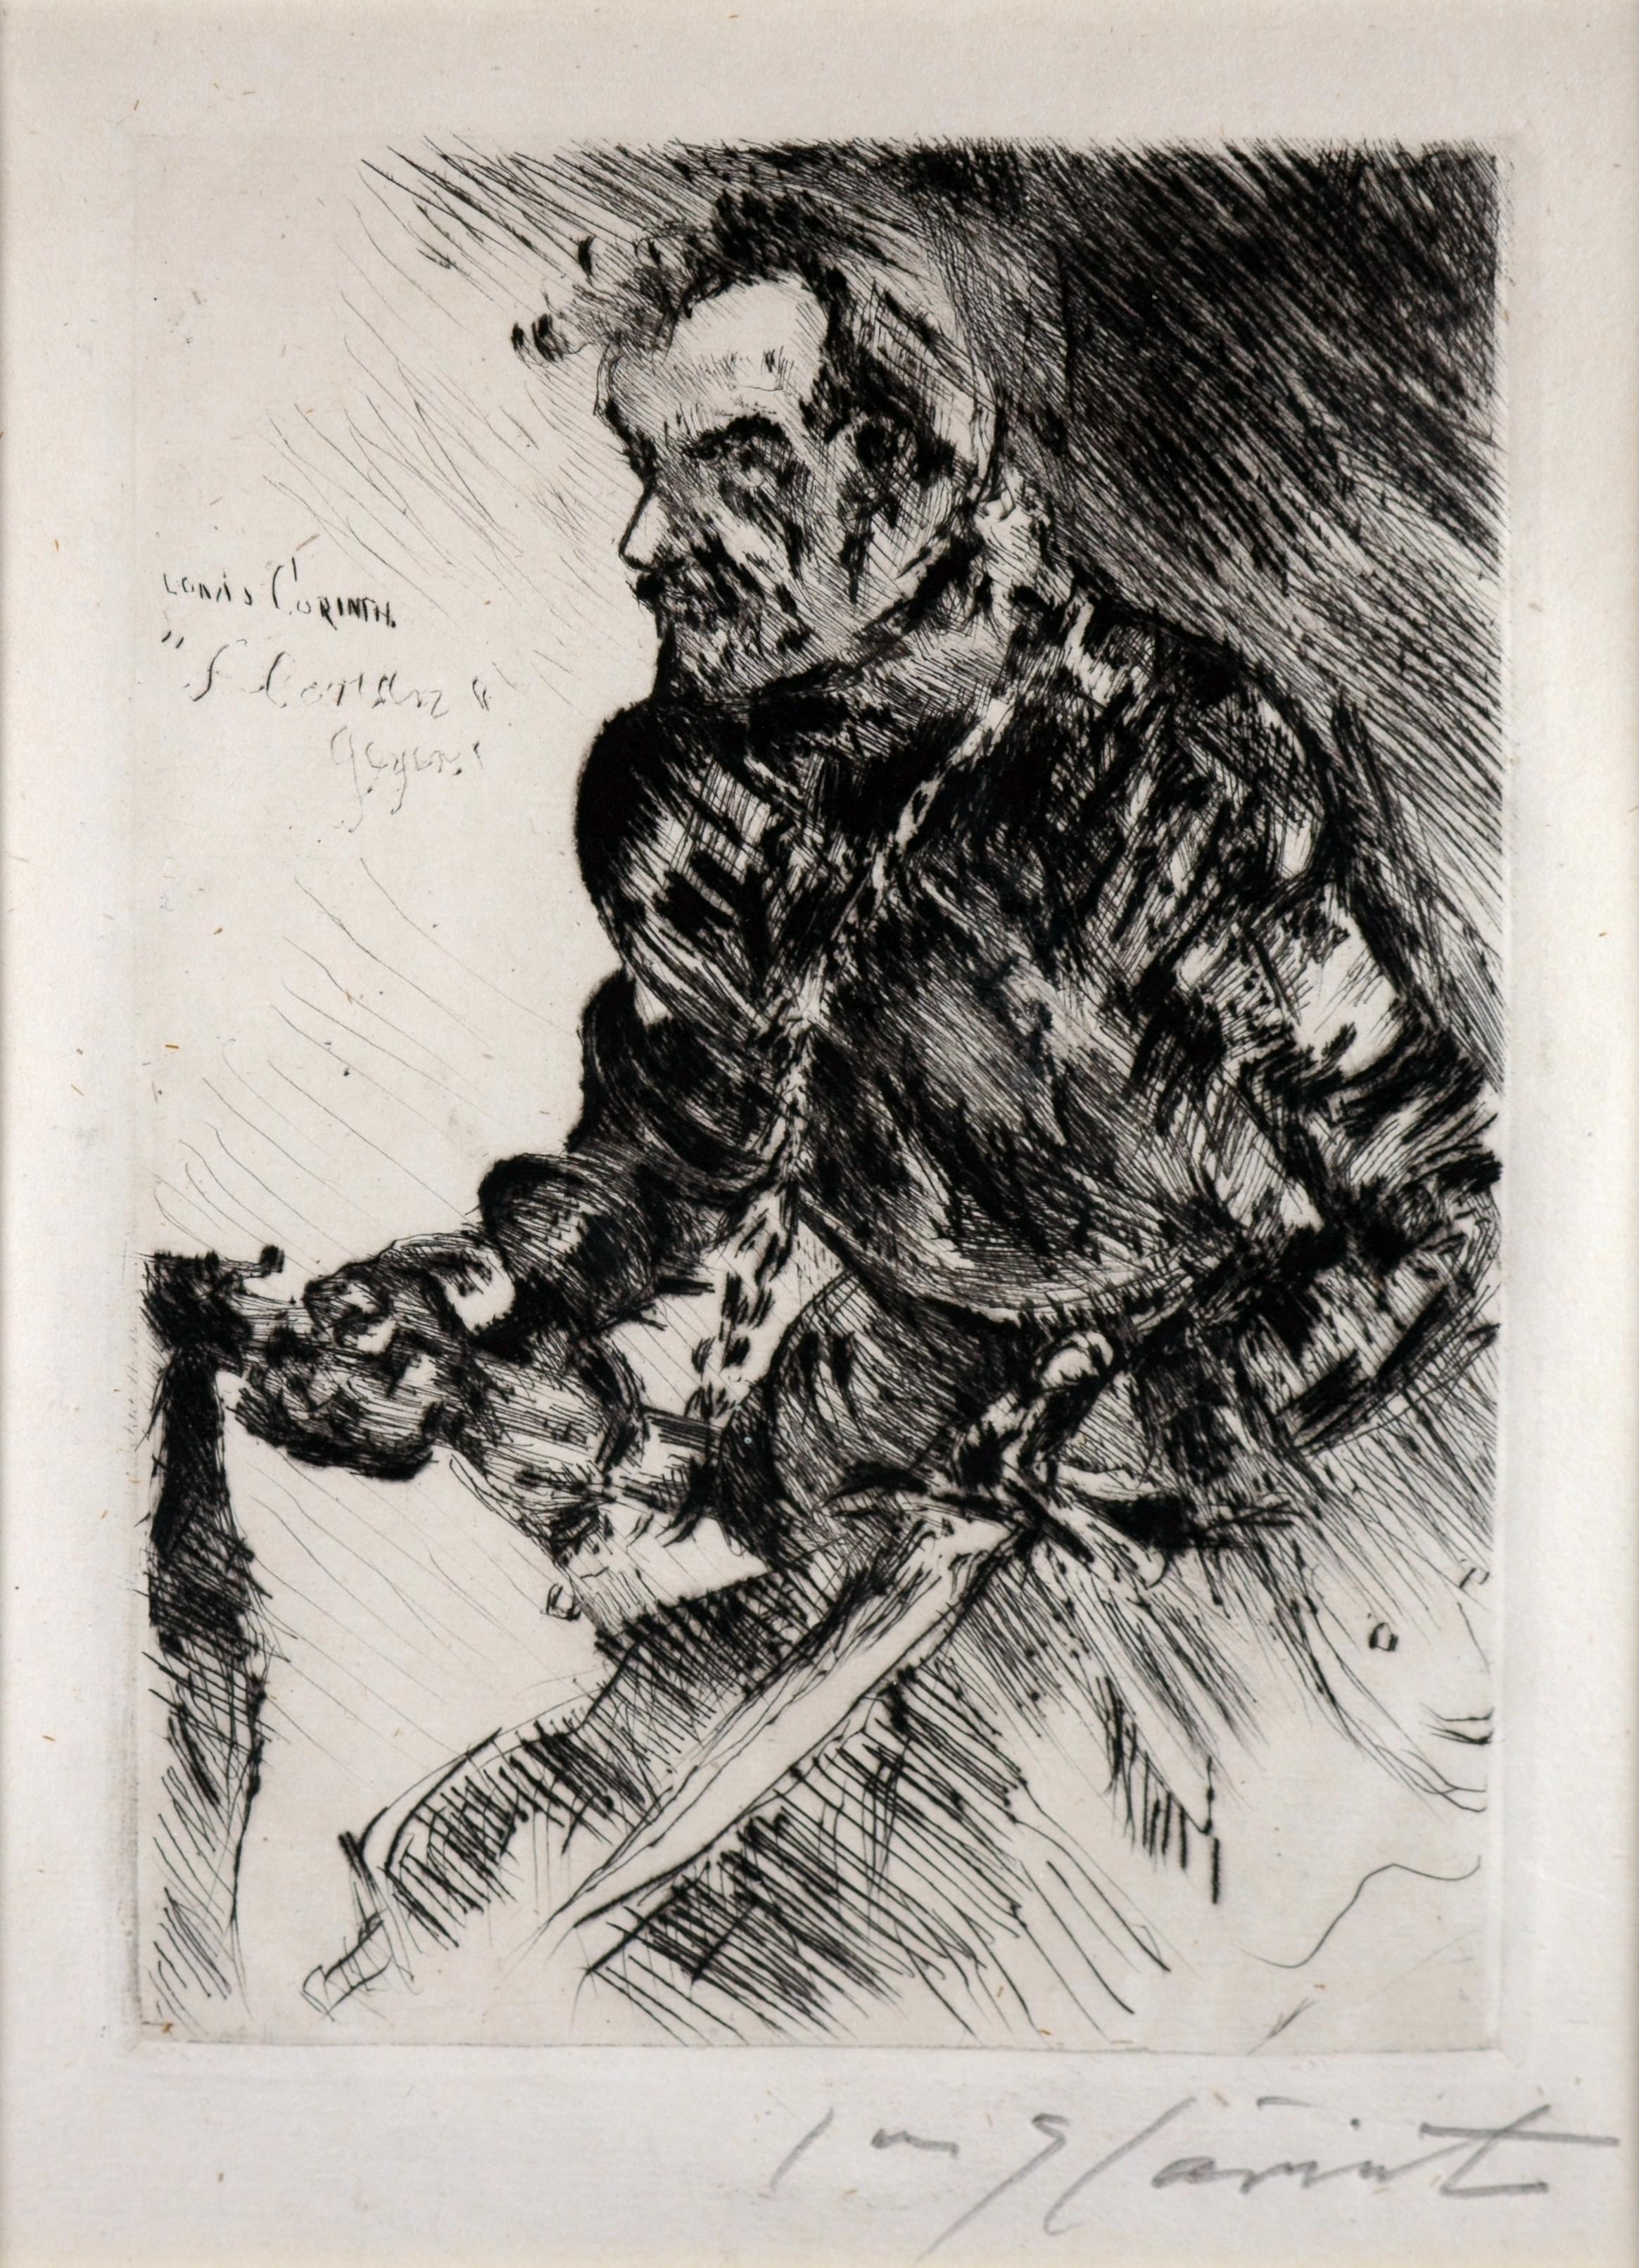 Lovis Corinth Figurative Print - Rudolf v. Rittner as Florian Geyer - Last man standing - 